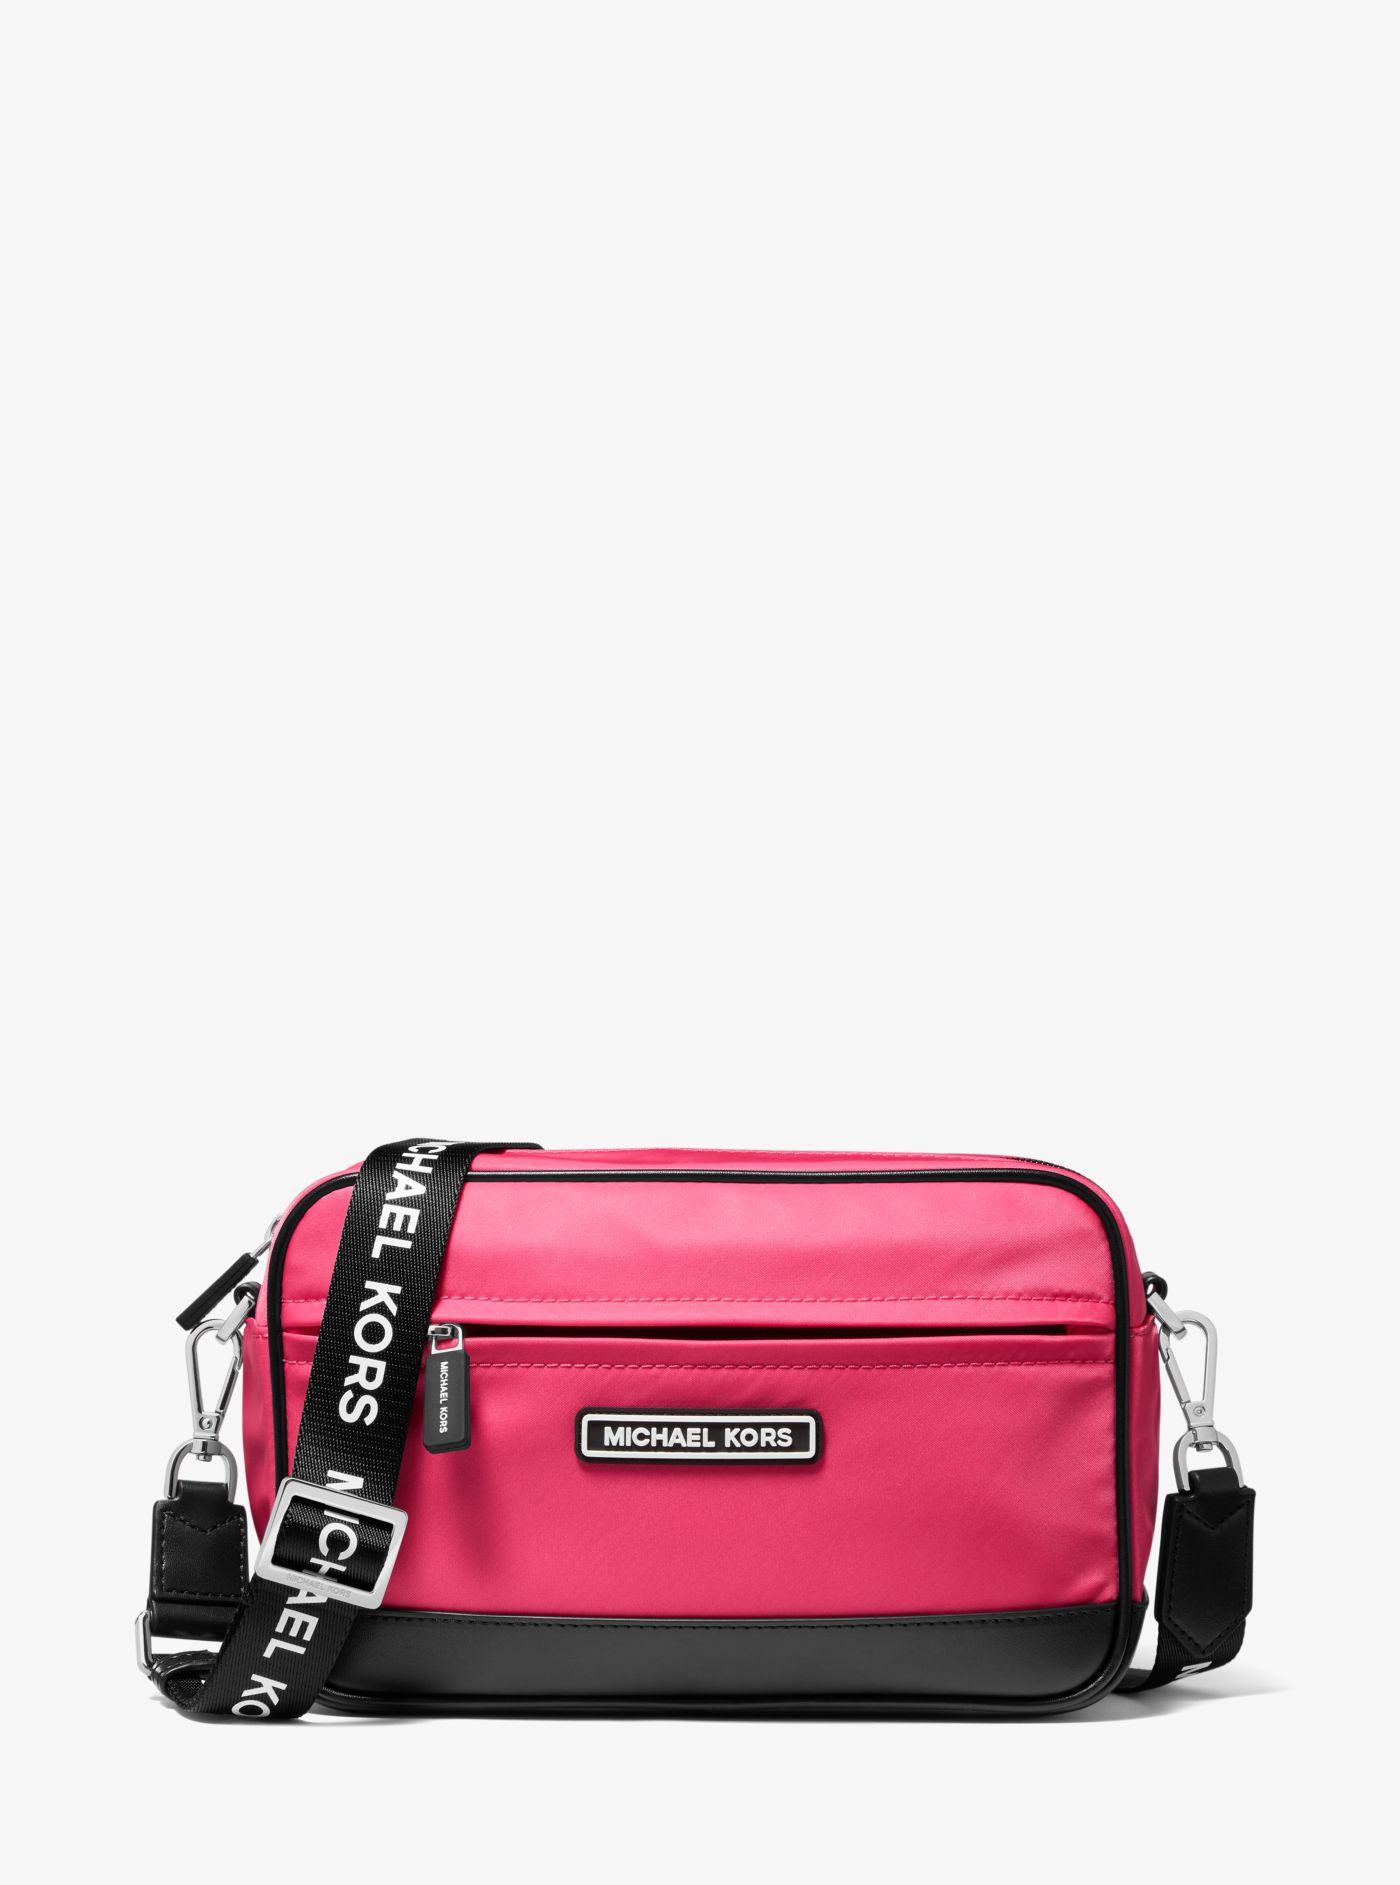 Michael Kors Synthetic Medium Nylon Camera Bag in Bright Pink 